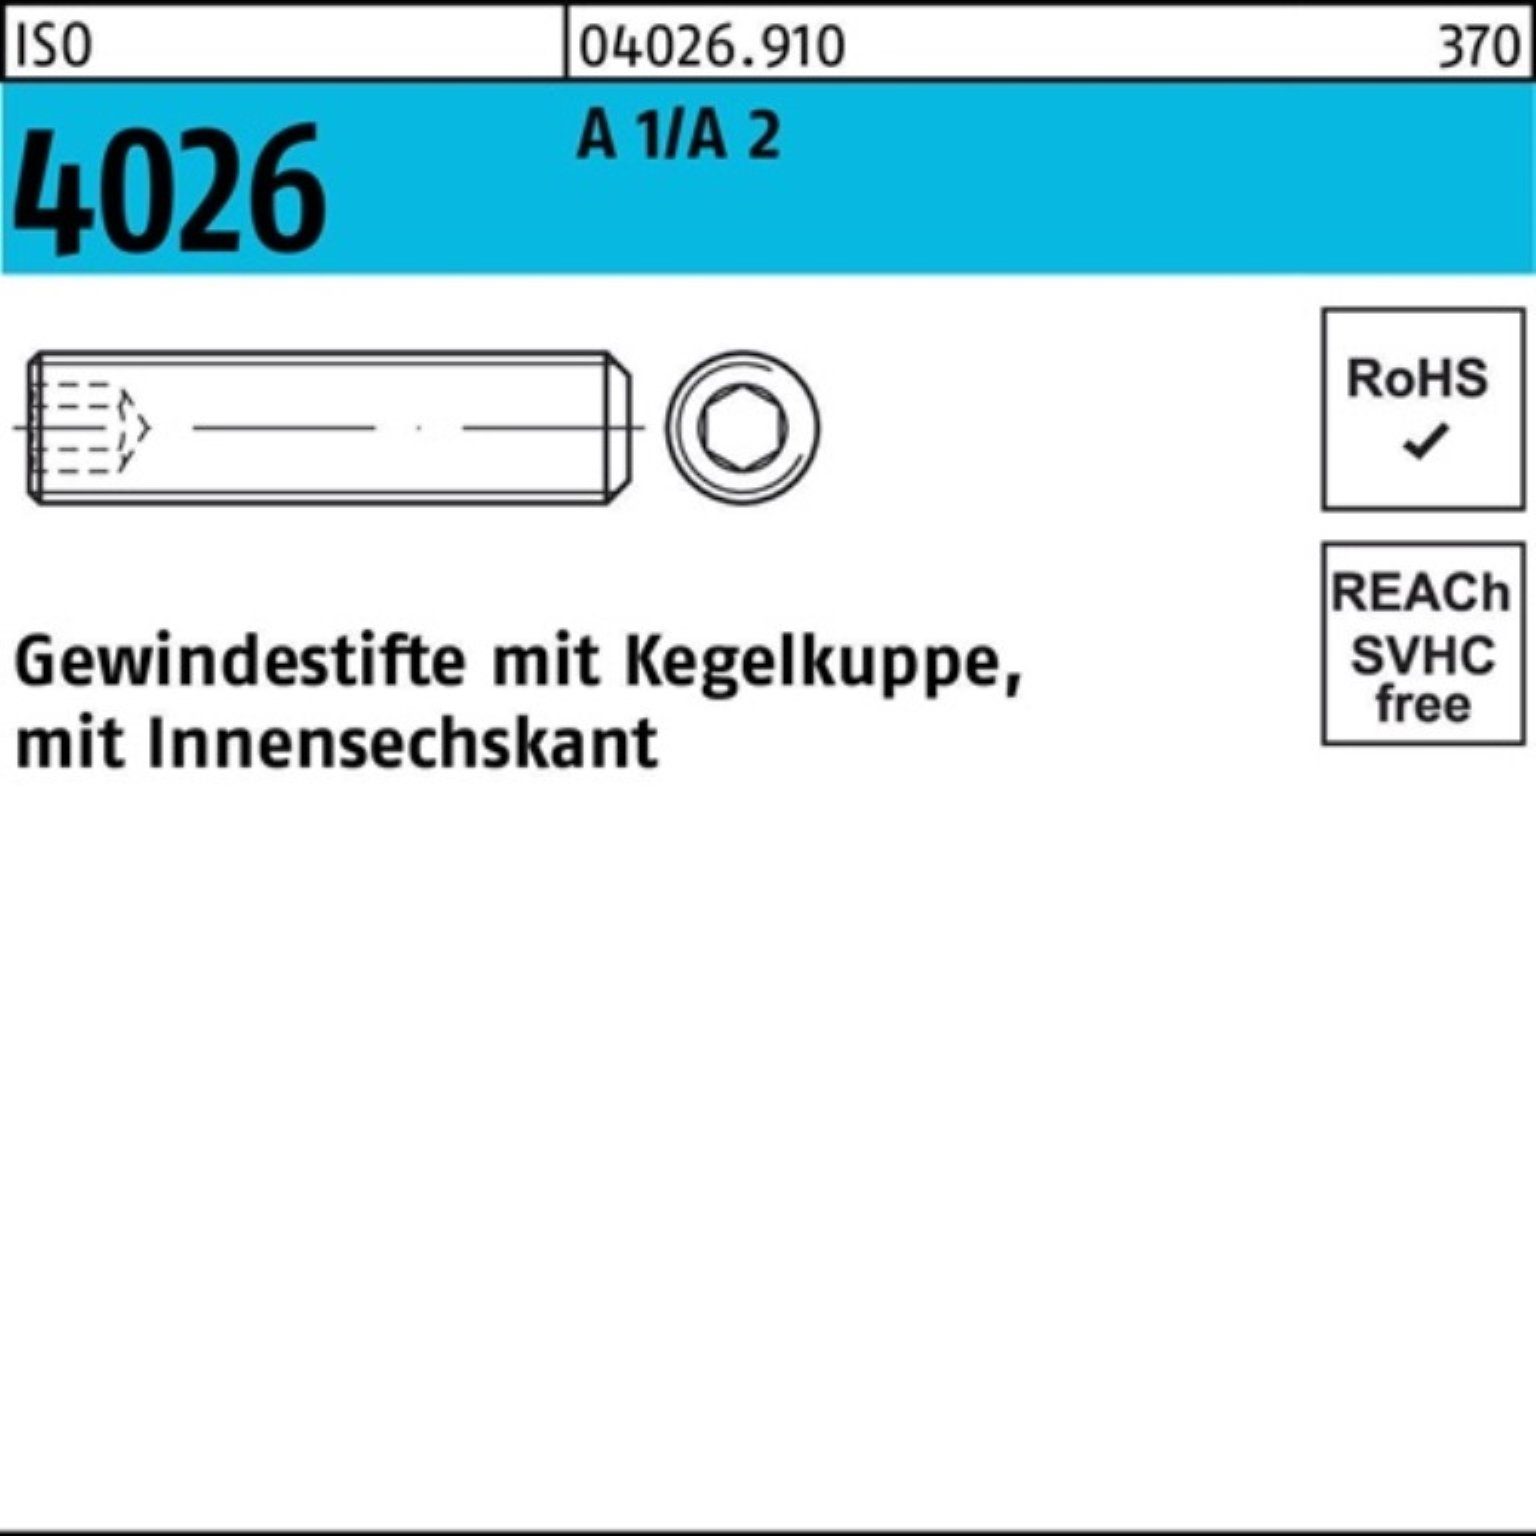 Kegelkuppe/Innen-6kt ISO Gewindebolzen Pack Gewindestift M6x 35 4026 200er 1/A 2 A Reyher 2